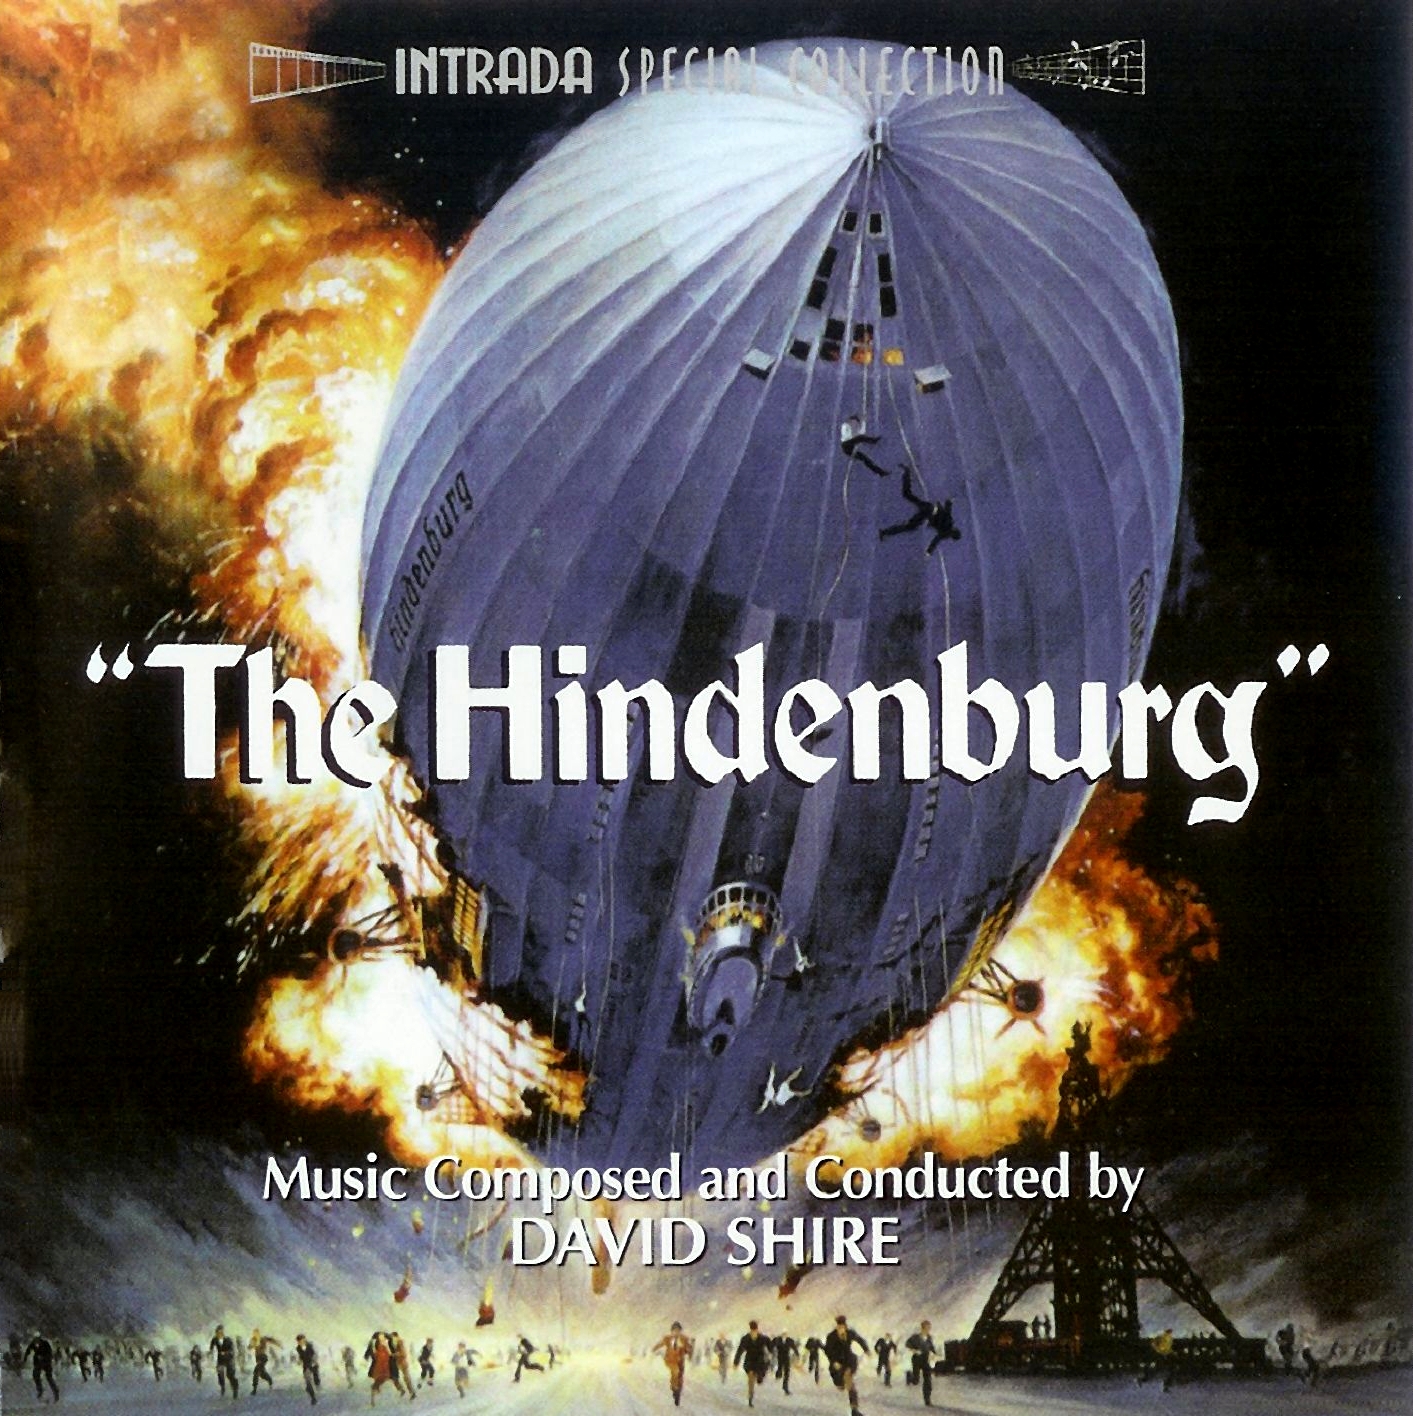 David Shire 1975 The Hindenburg amusicofmysoul blohspot com